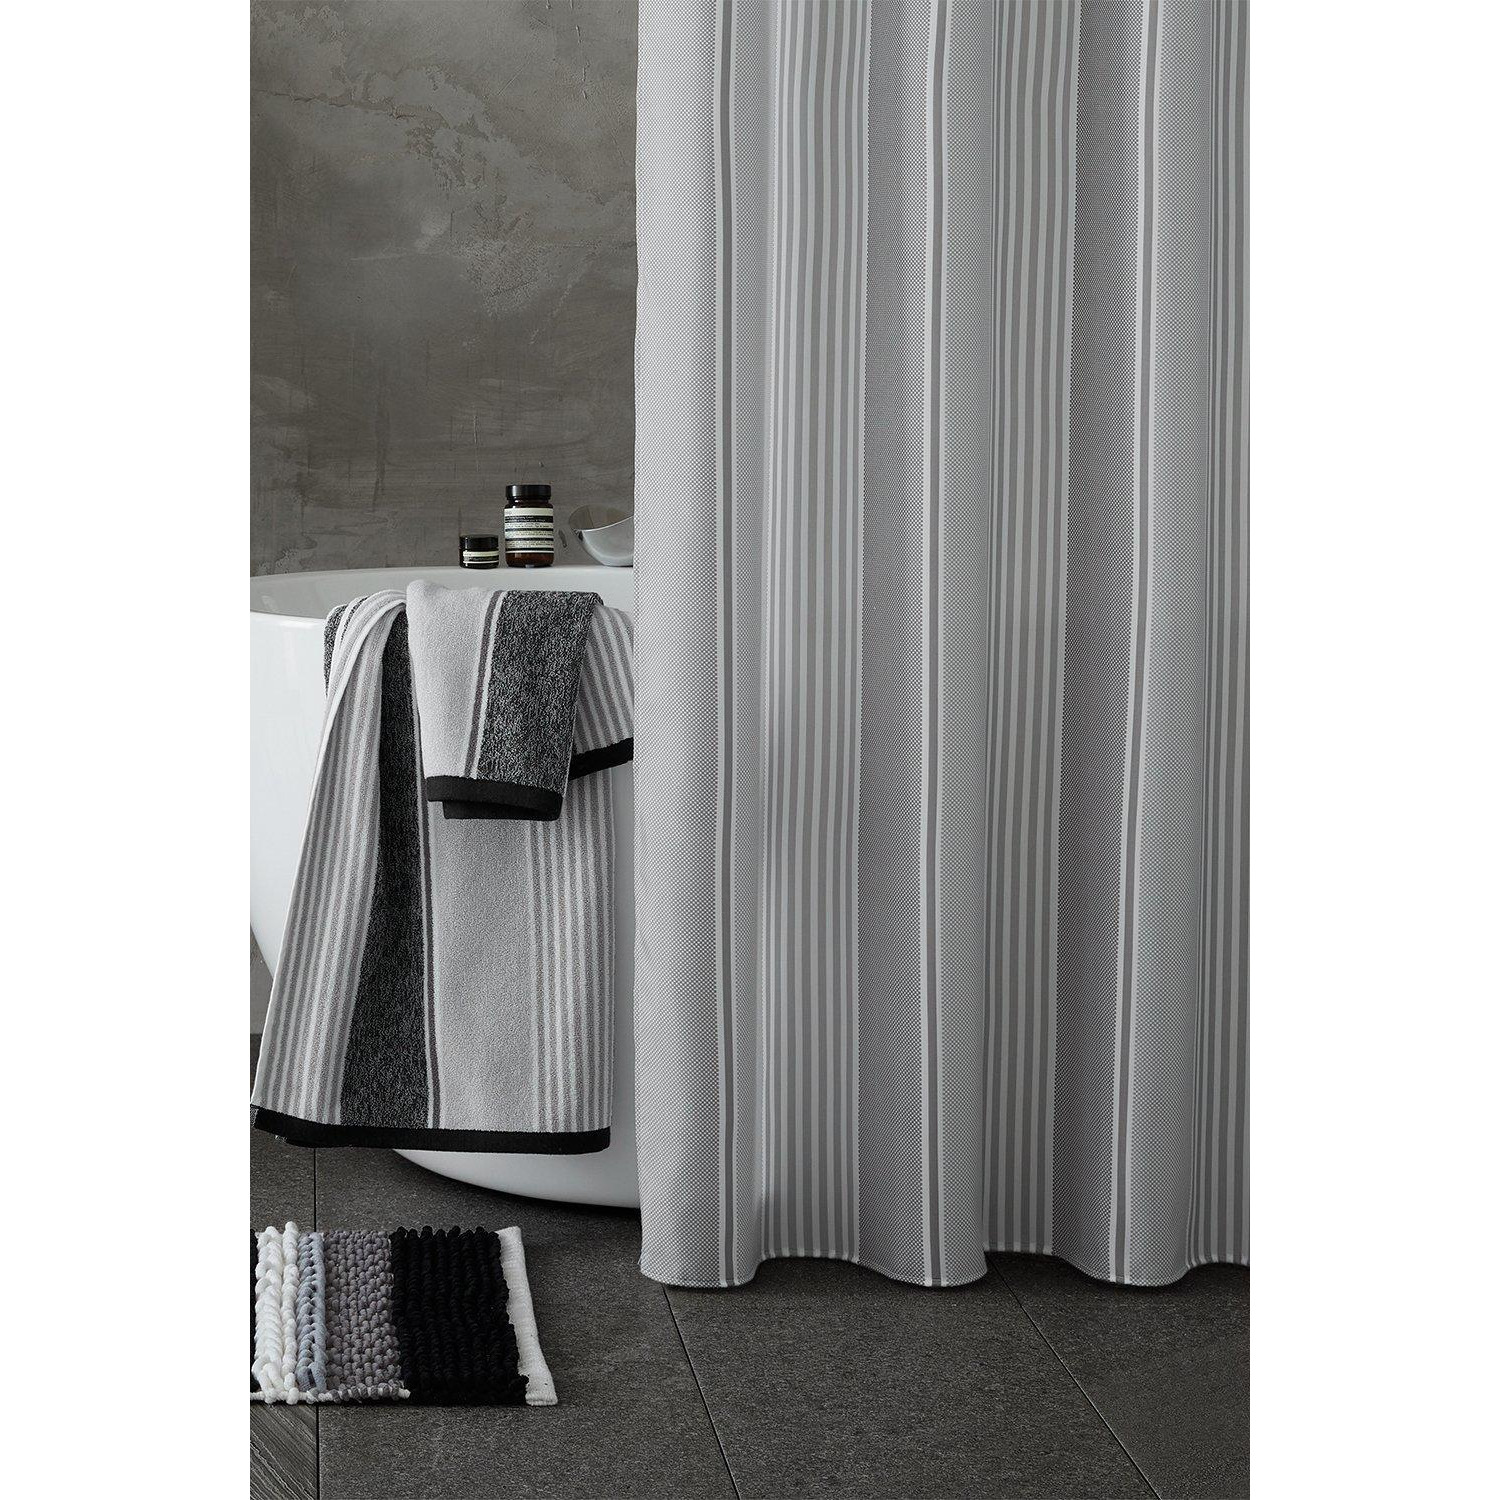 'Textured Stripe' Shower Curtain - image 1